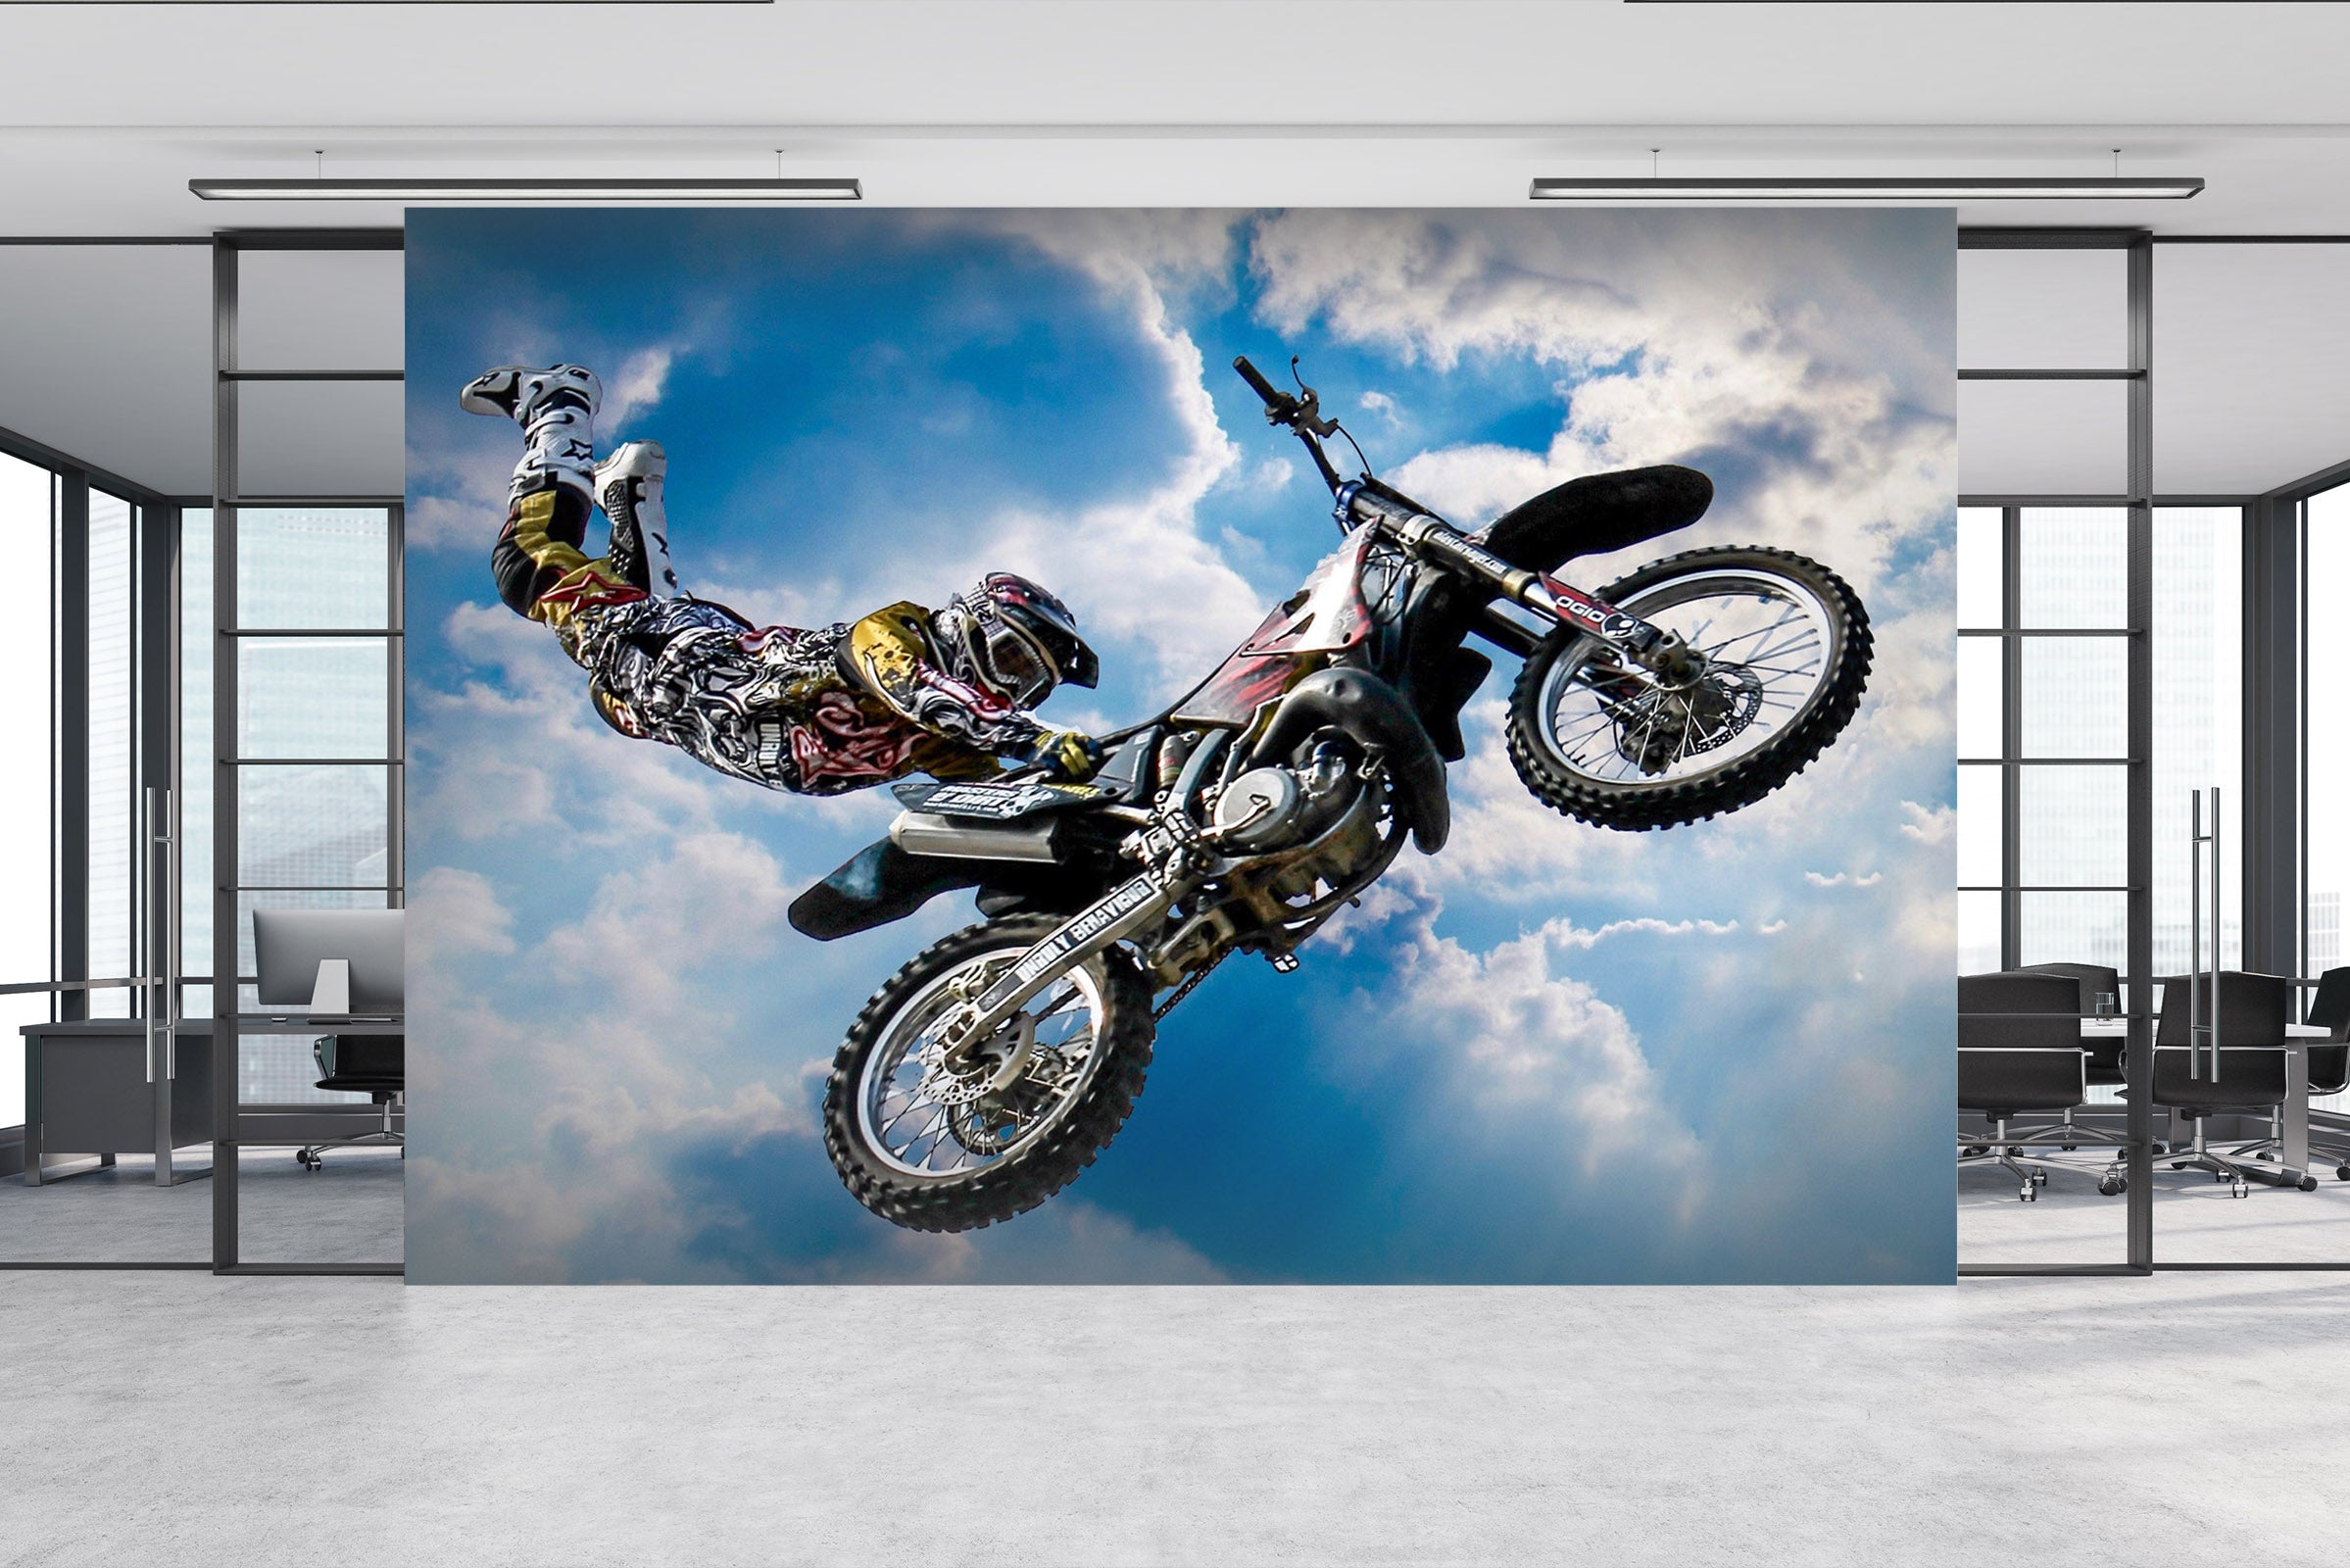 3D Motorcycle Flies Up 128 Vehicle Wall Murals